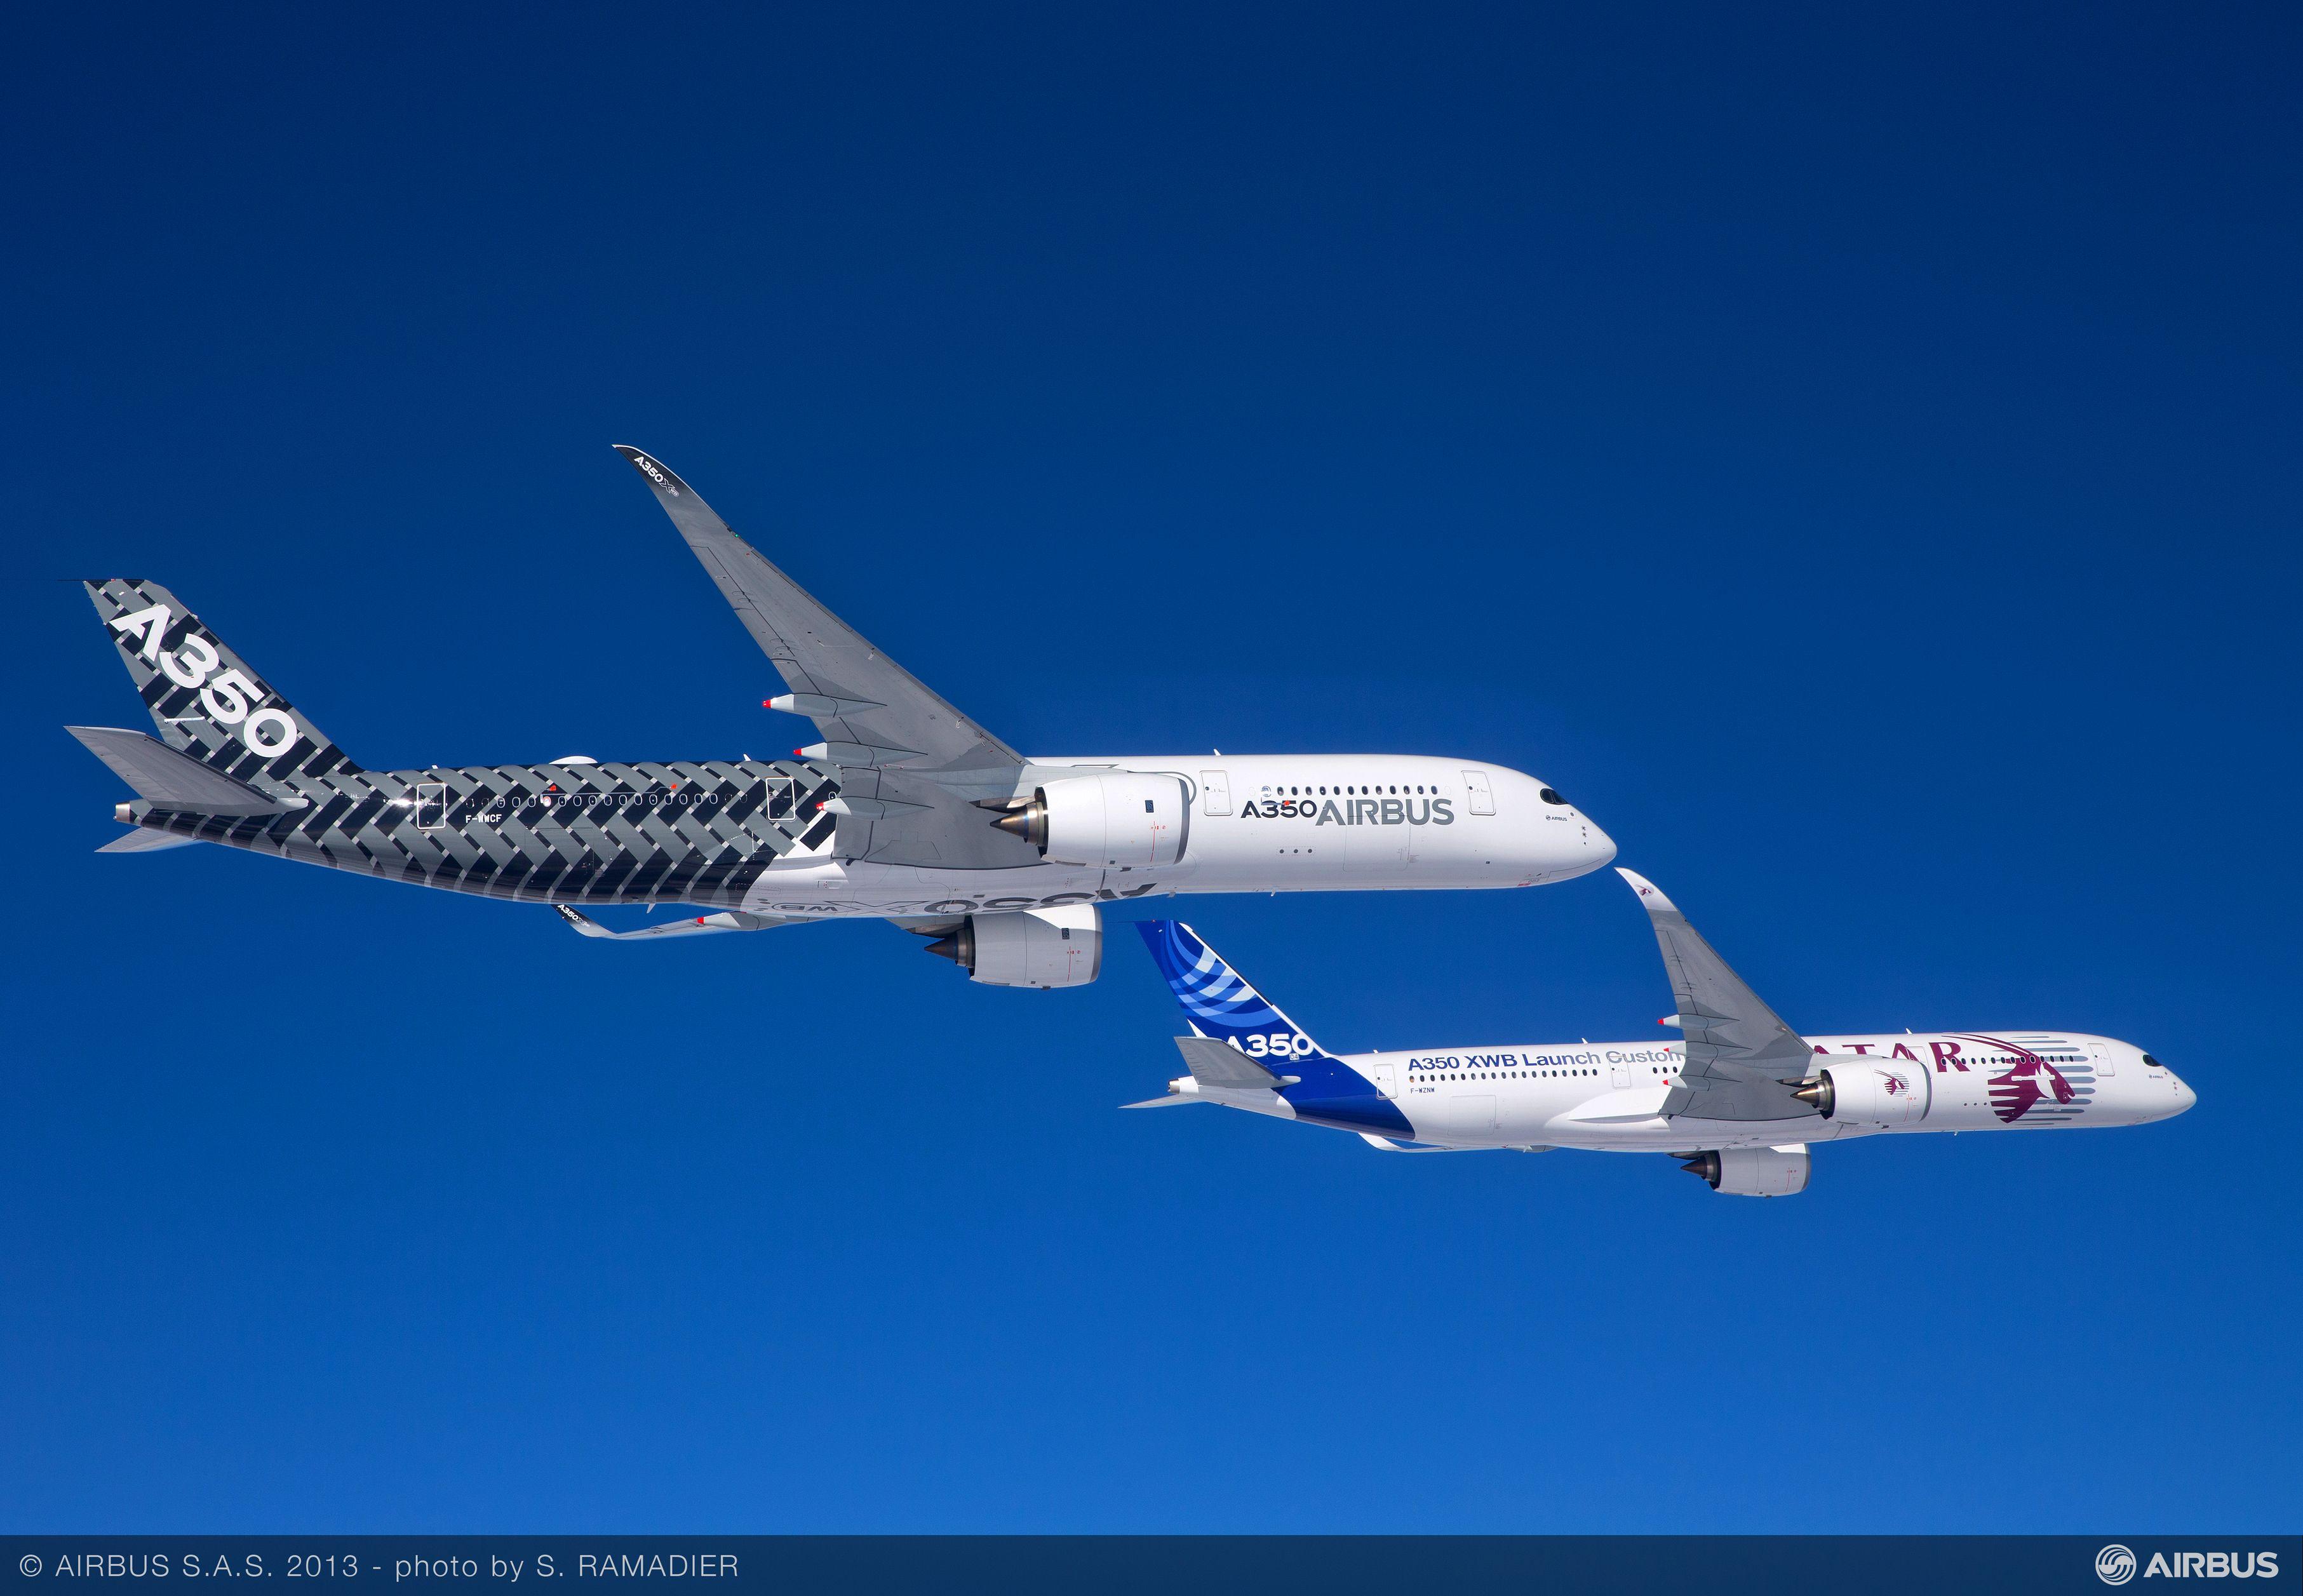 Photos: Interior Tour of the Airbus A350 XWB